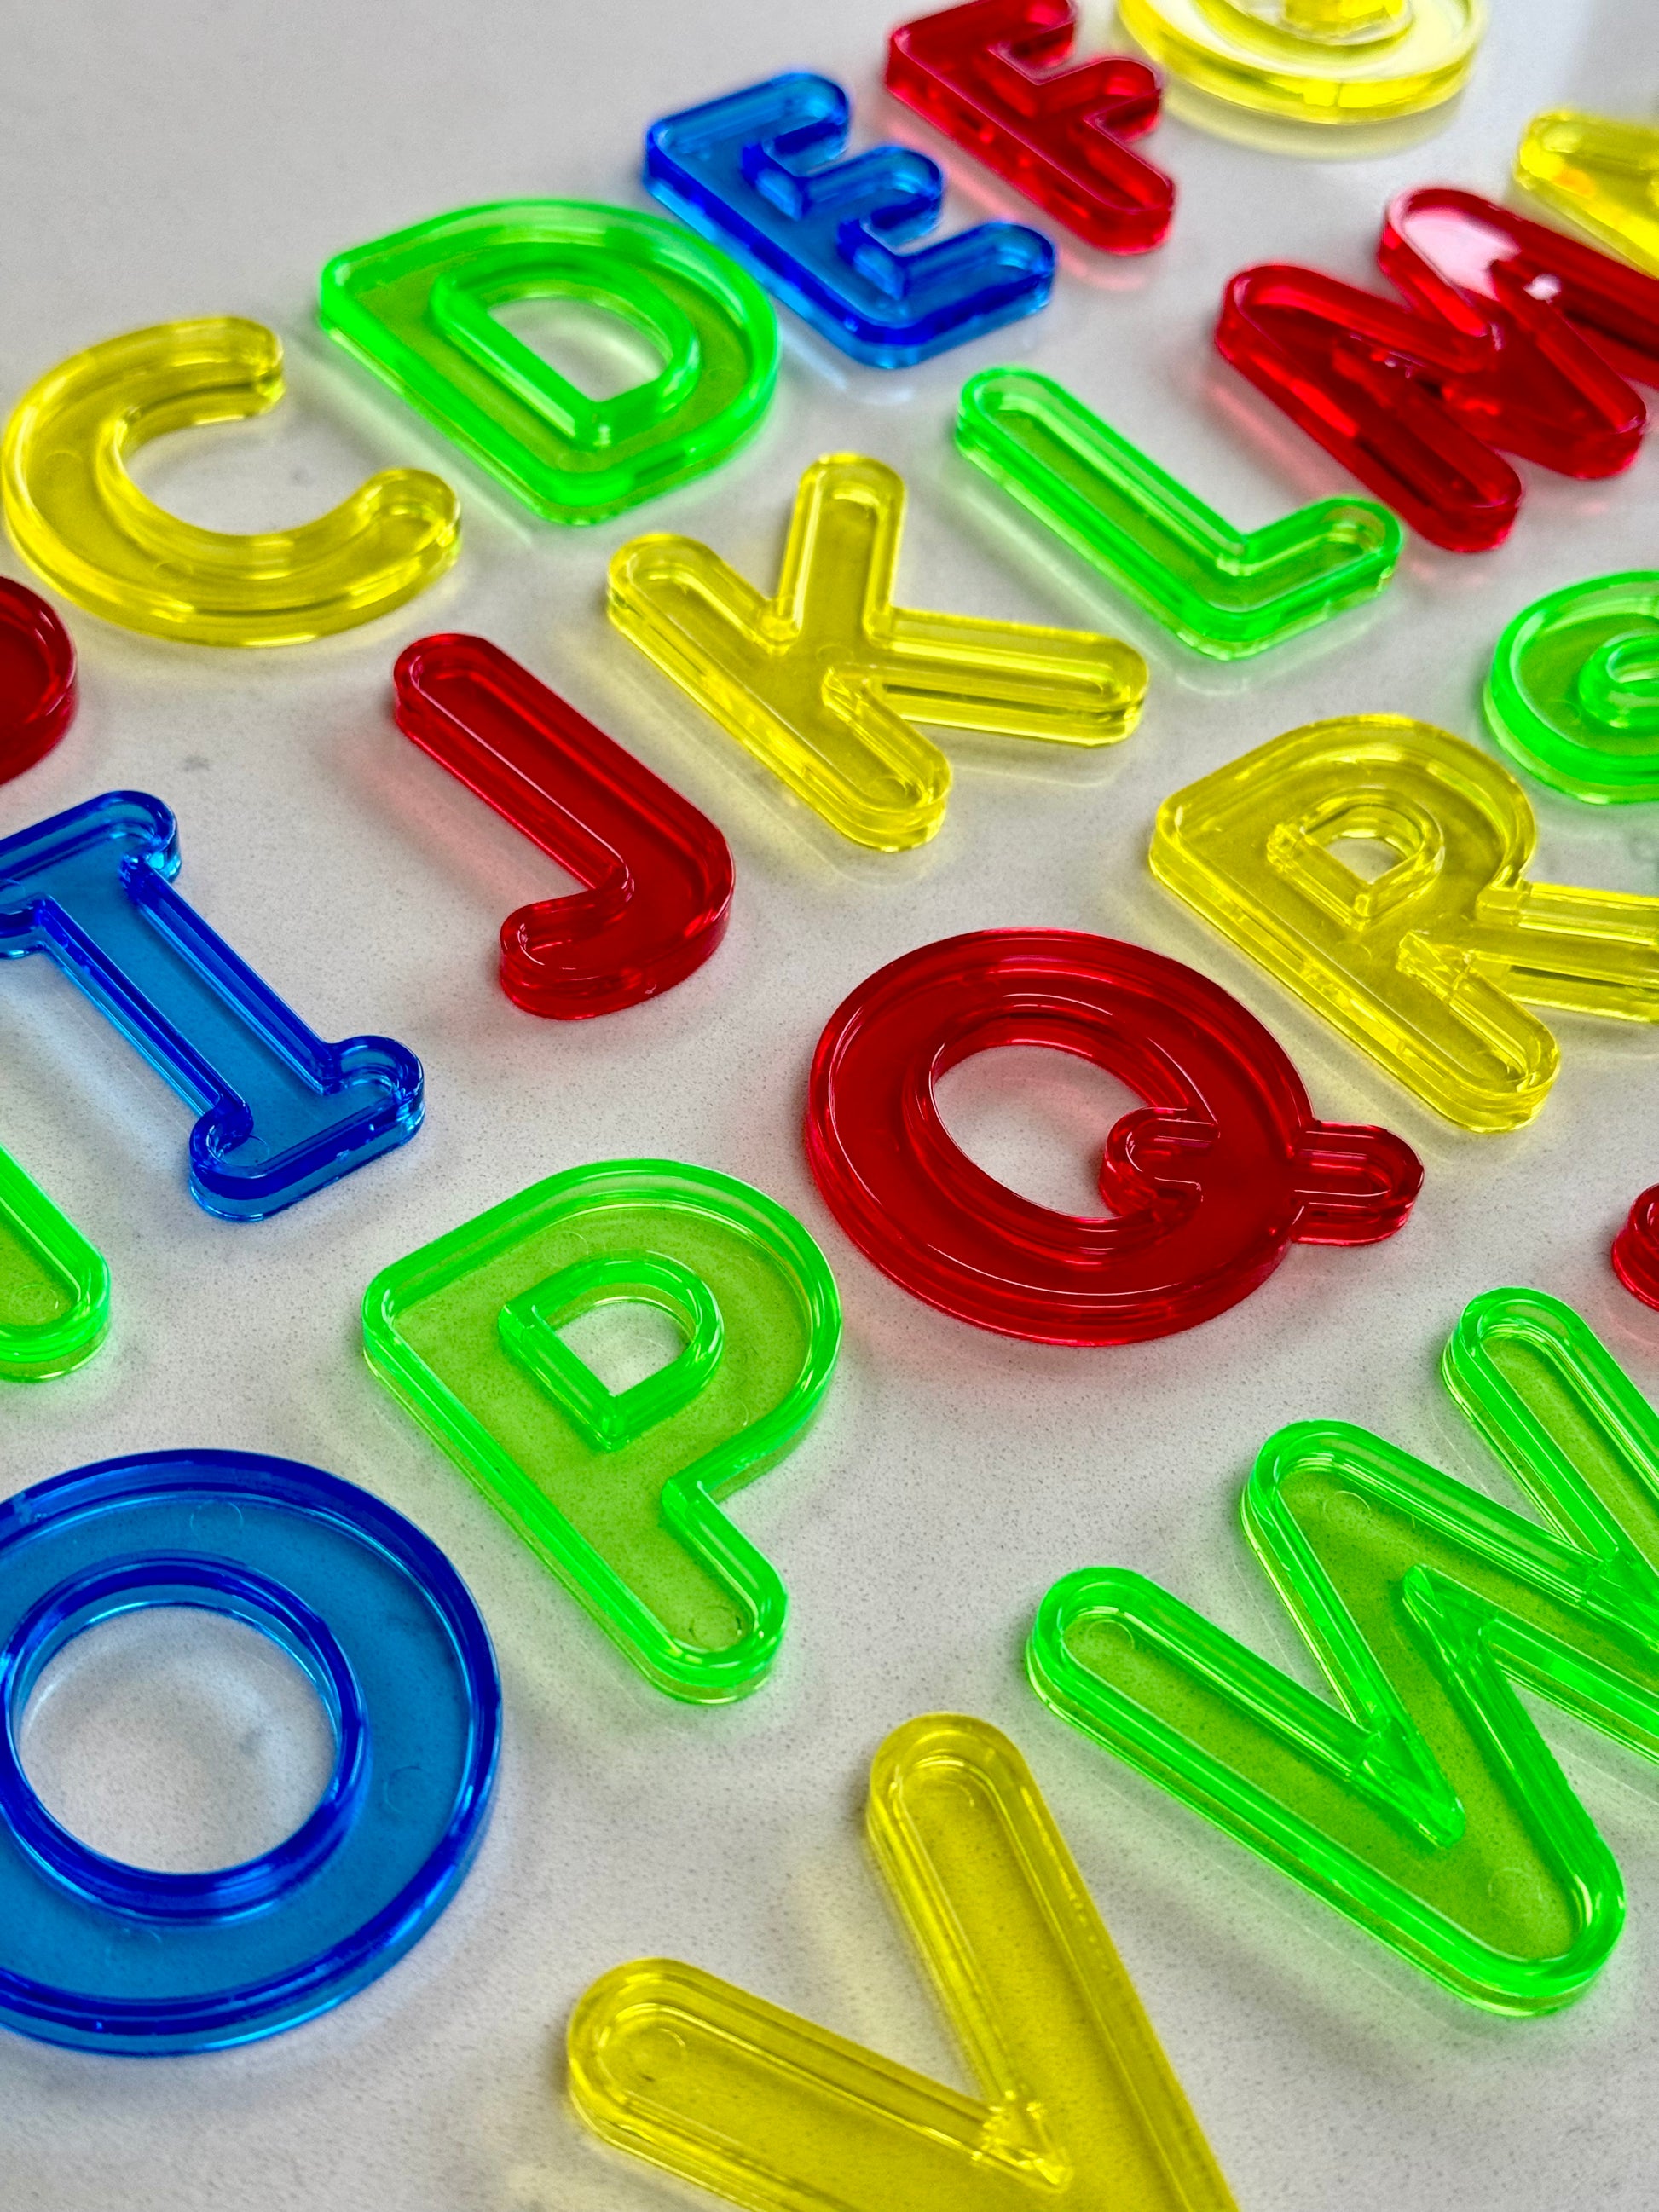 Translucent Colour Uppercase Letters